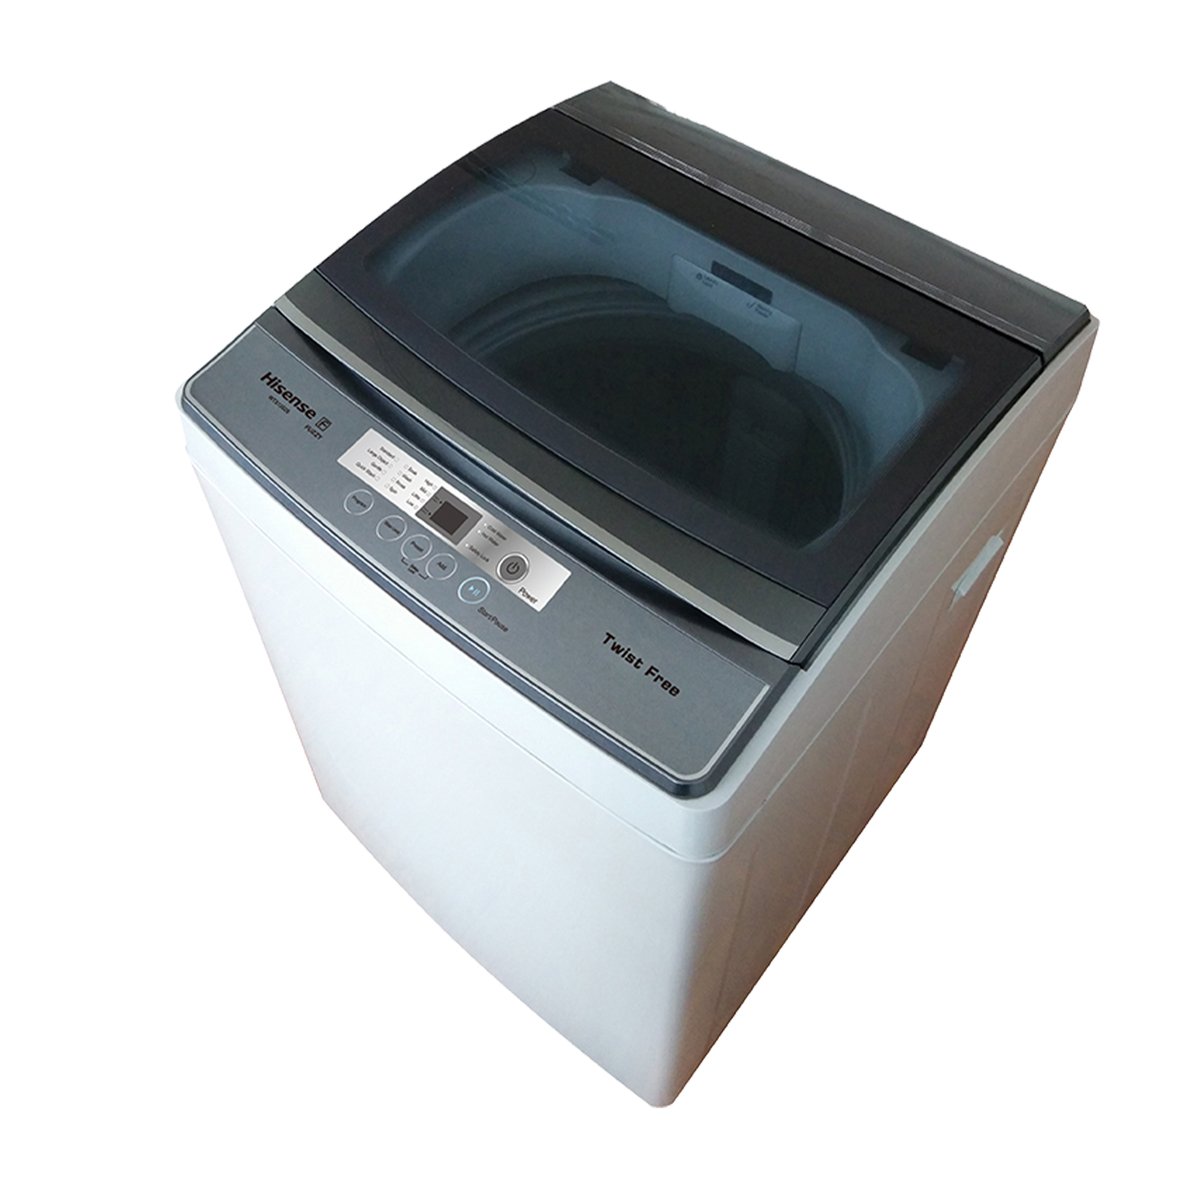 Hisense Top Load Washing Machine WTX1302S 13Kg